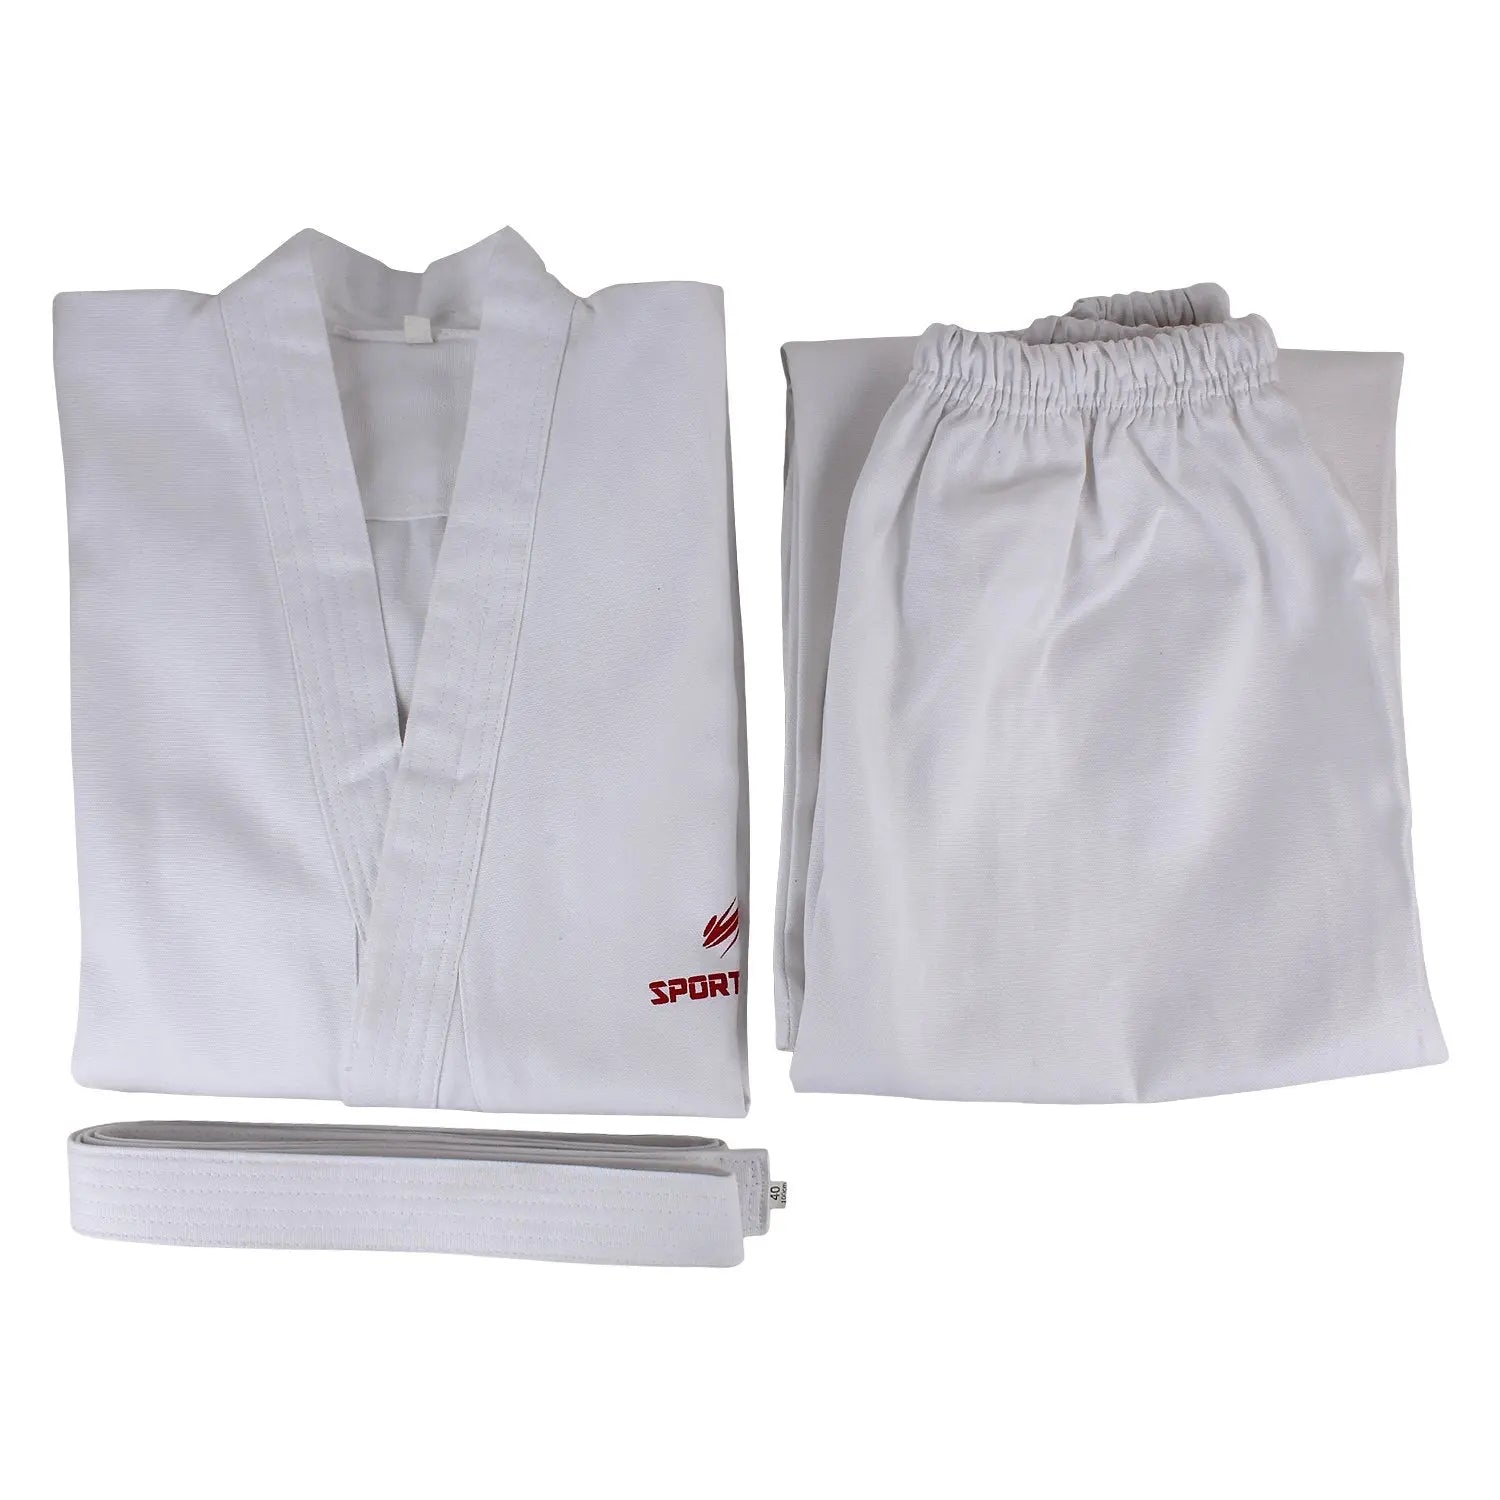 Karate Uniform by SportSoul playmonks